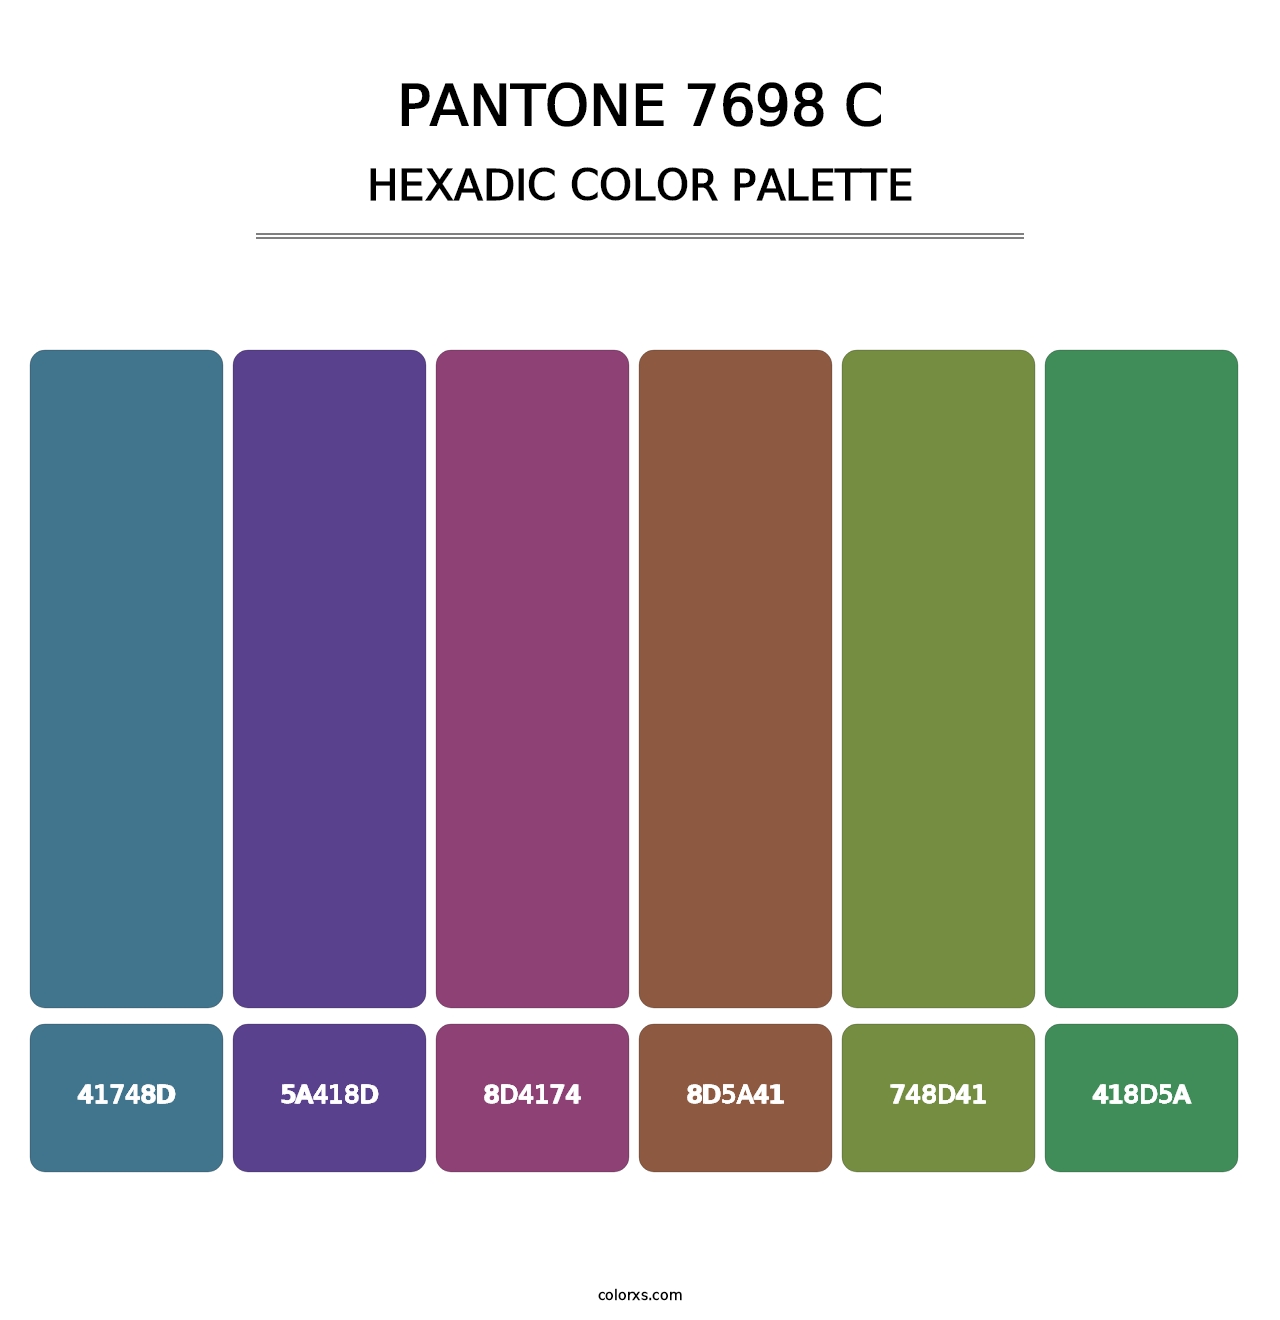 PANTONE 7698 C - Hexadic Color Palette